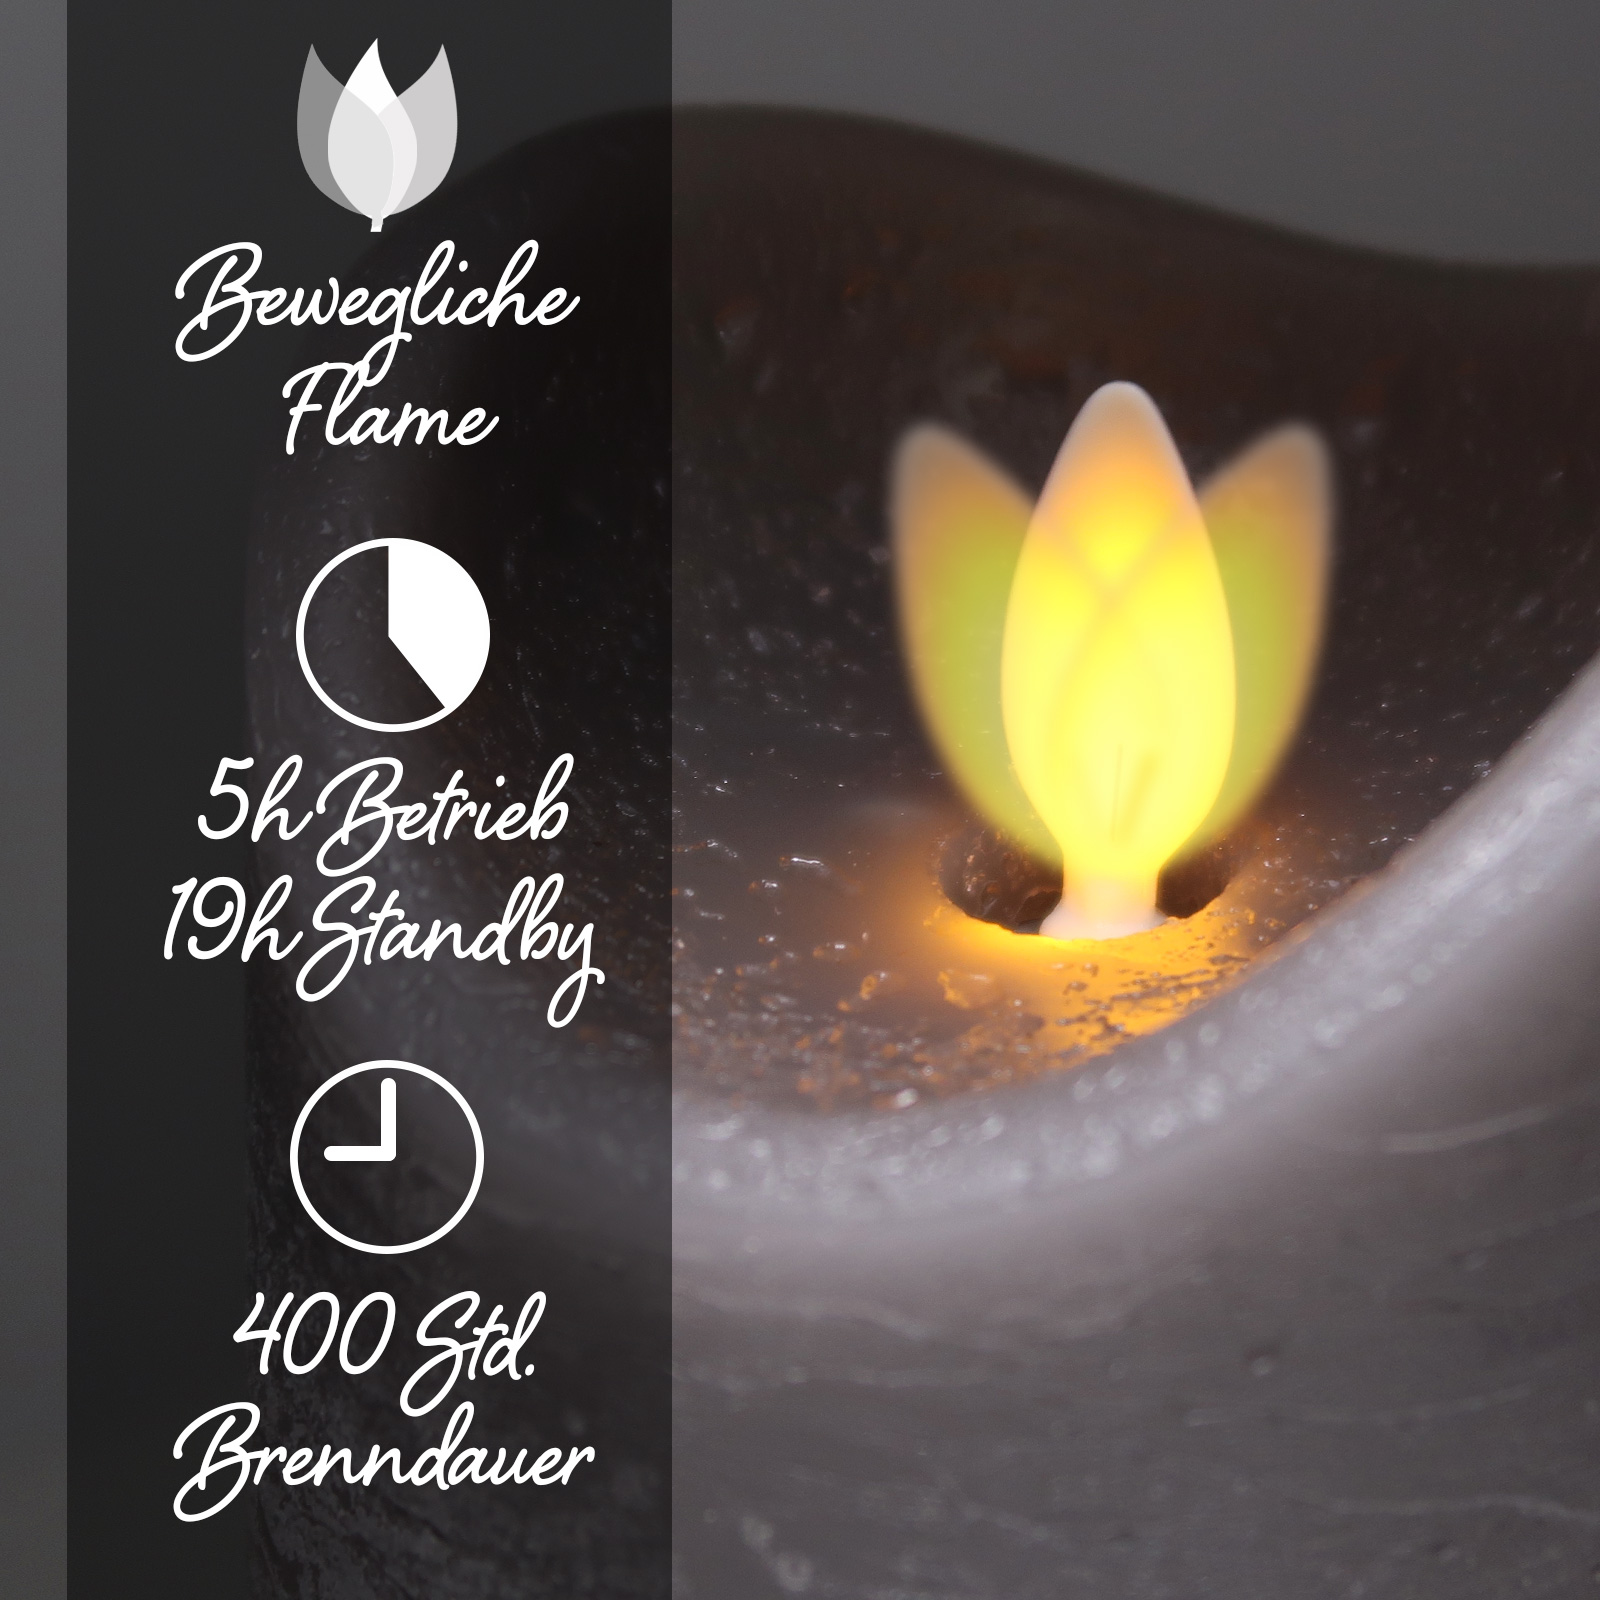 Tronje, LED-Echtwachskerze Ø8x13cm Grau Rustik mit Fernbedienung - Kerzenlichtsimulation